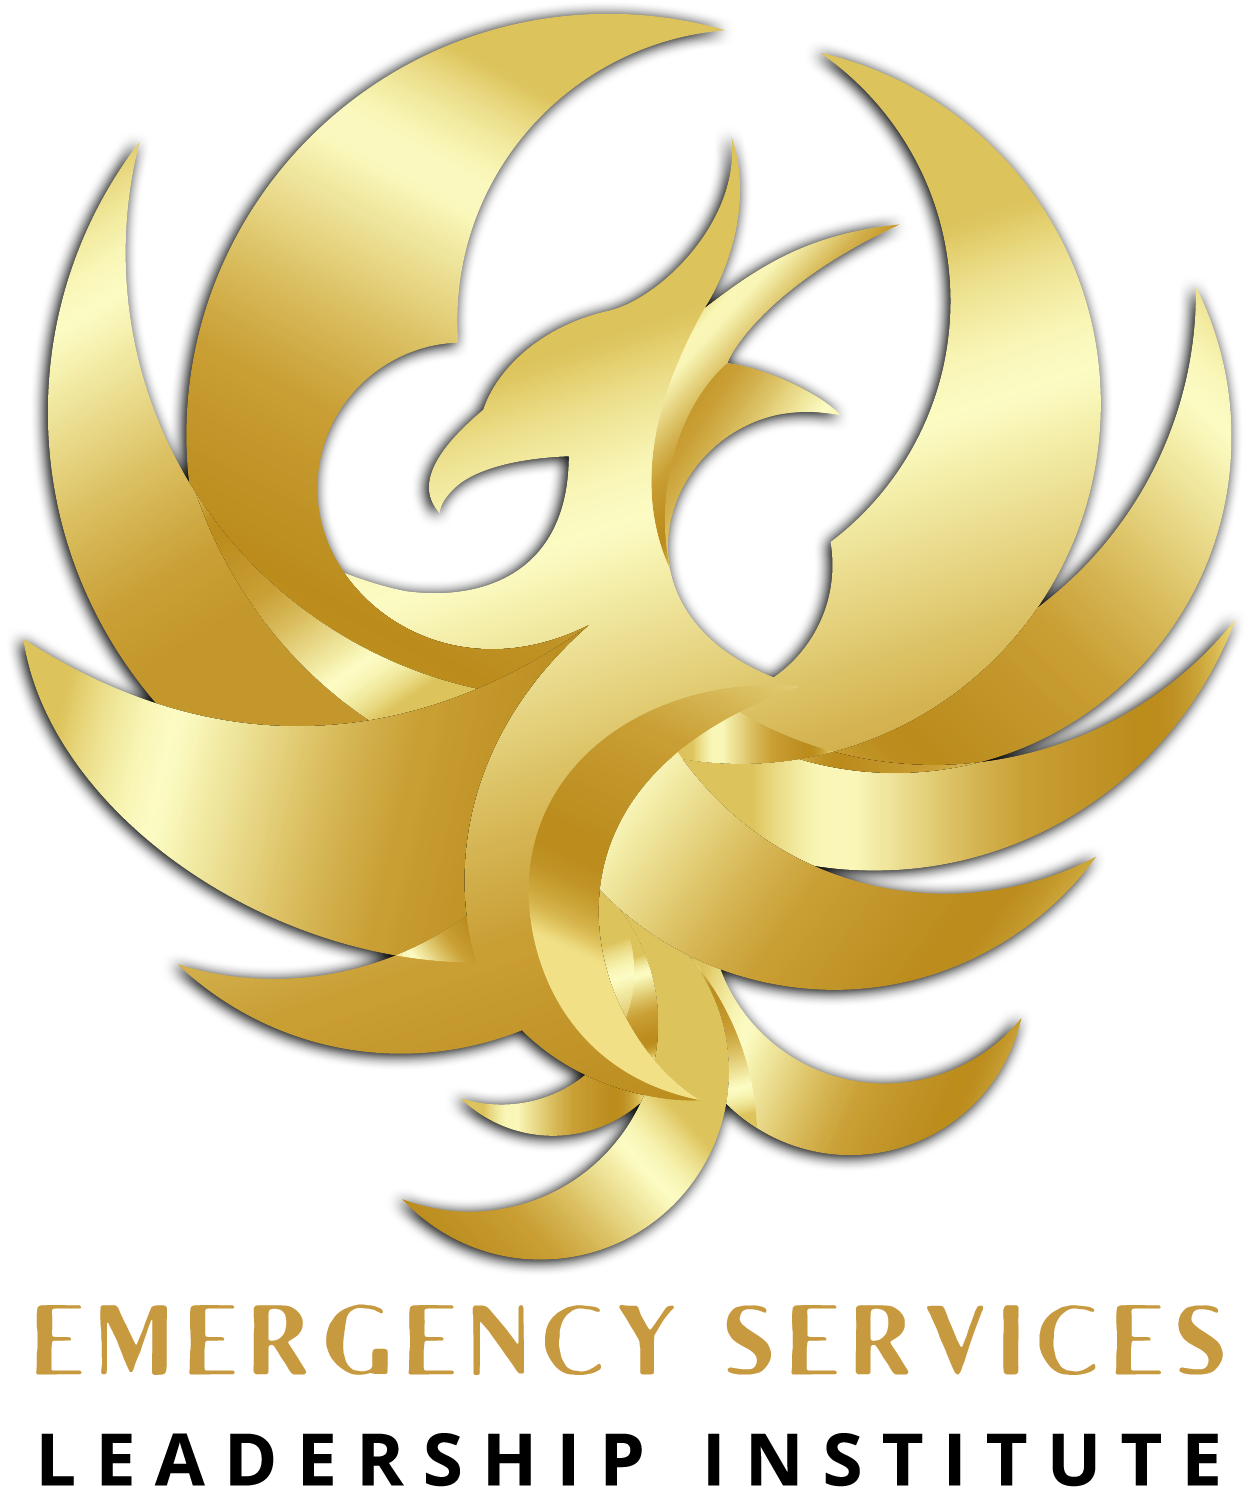 Emergency Services Leadership Institute